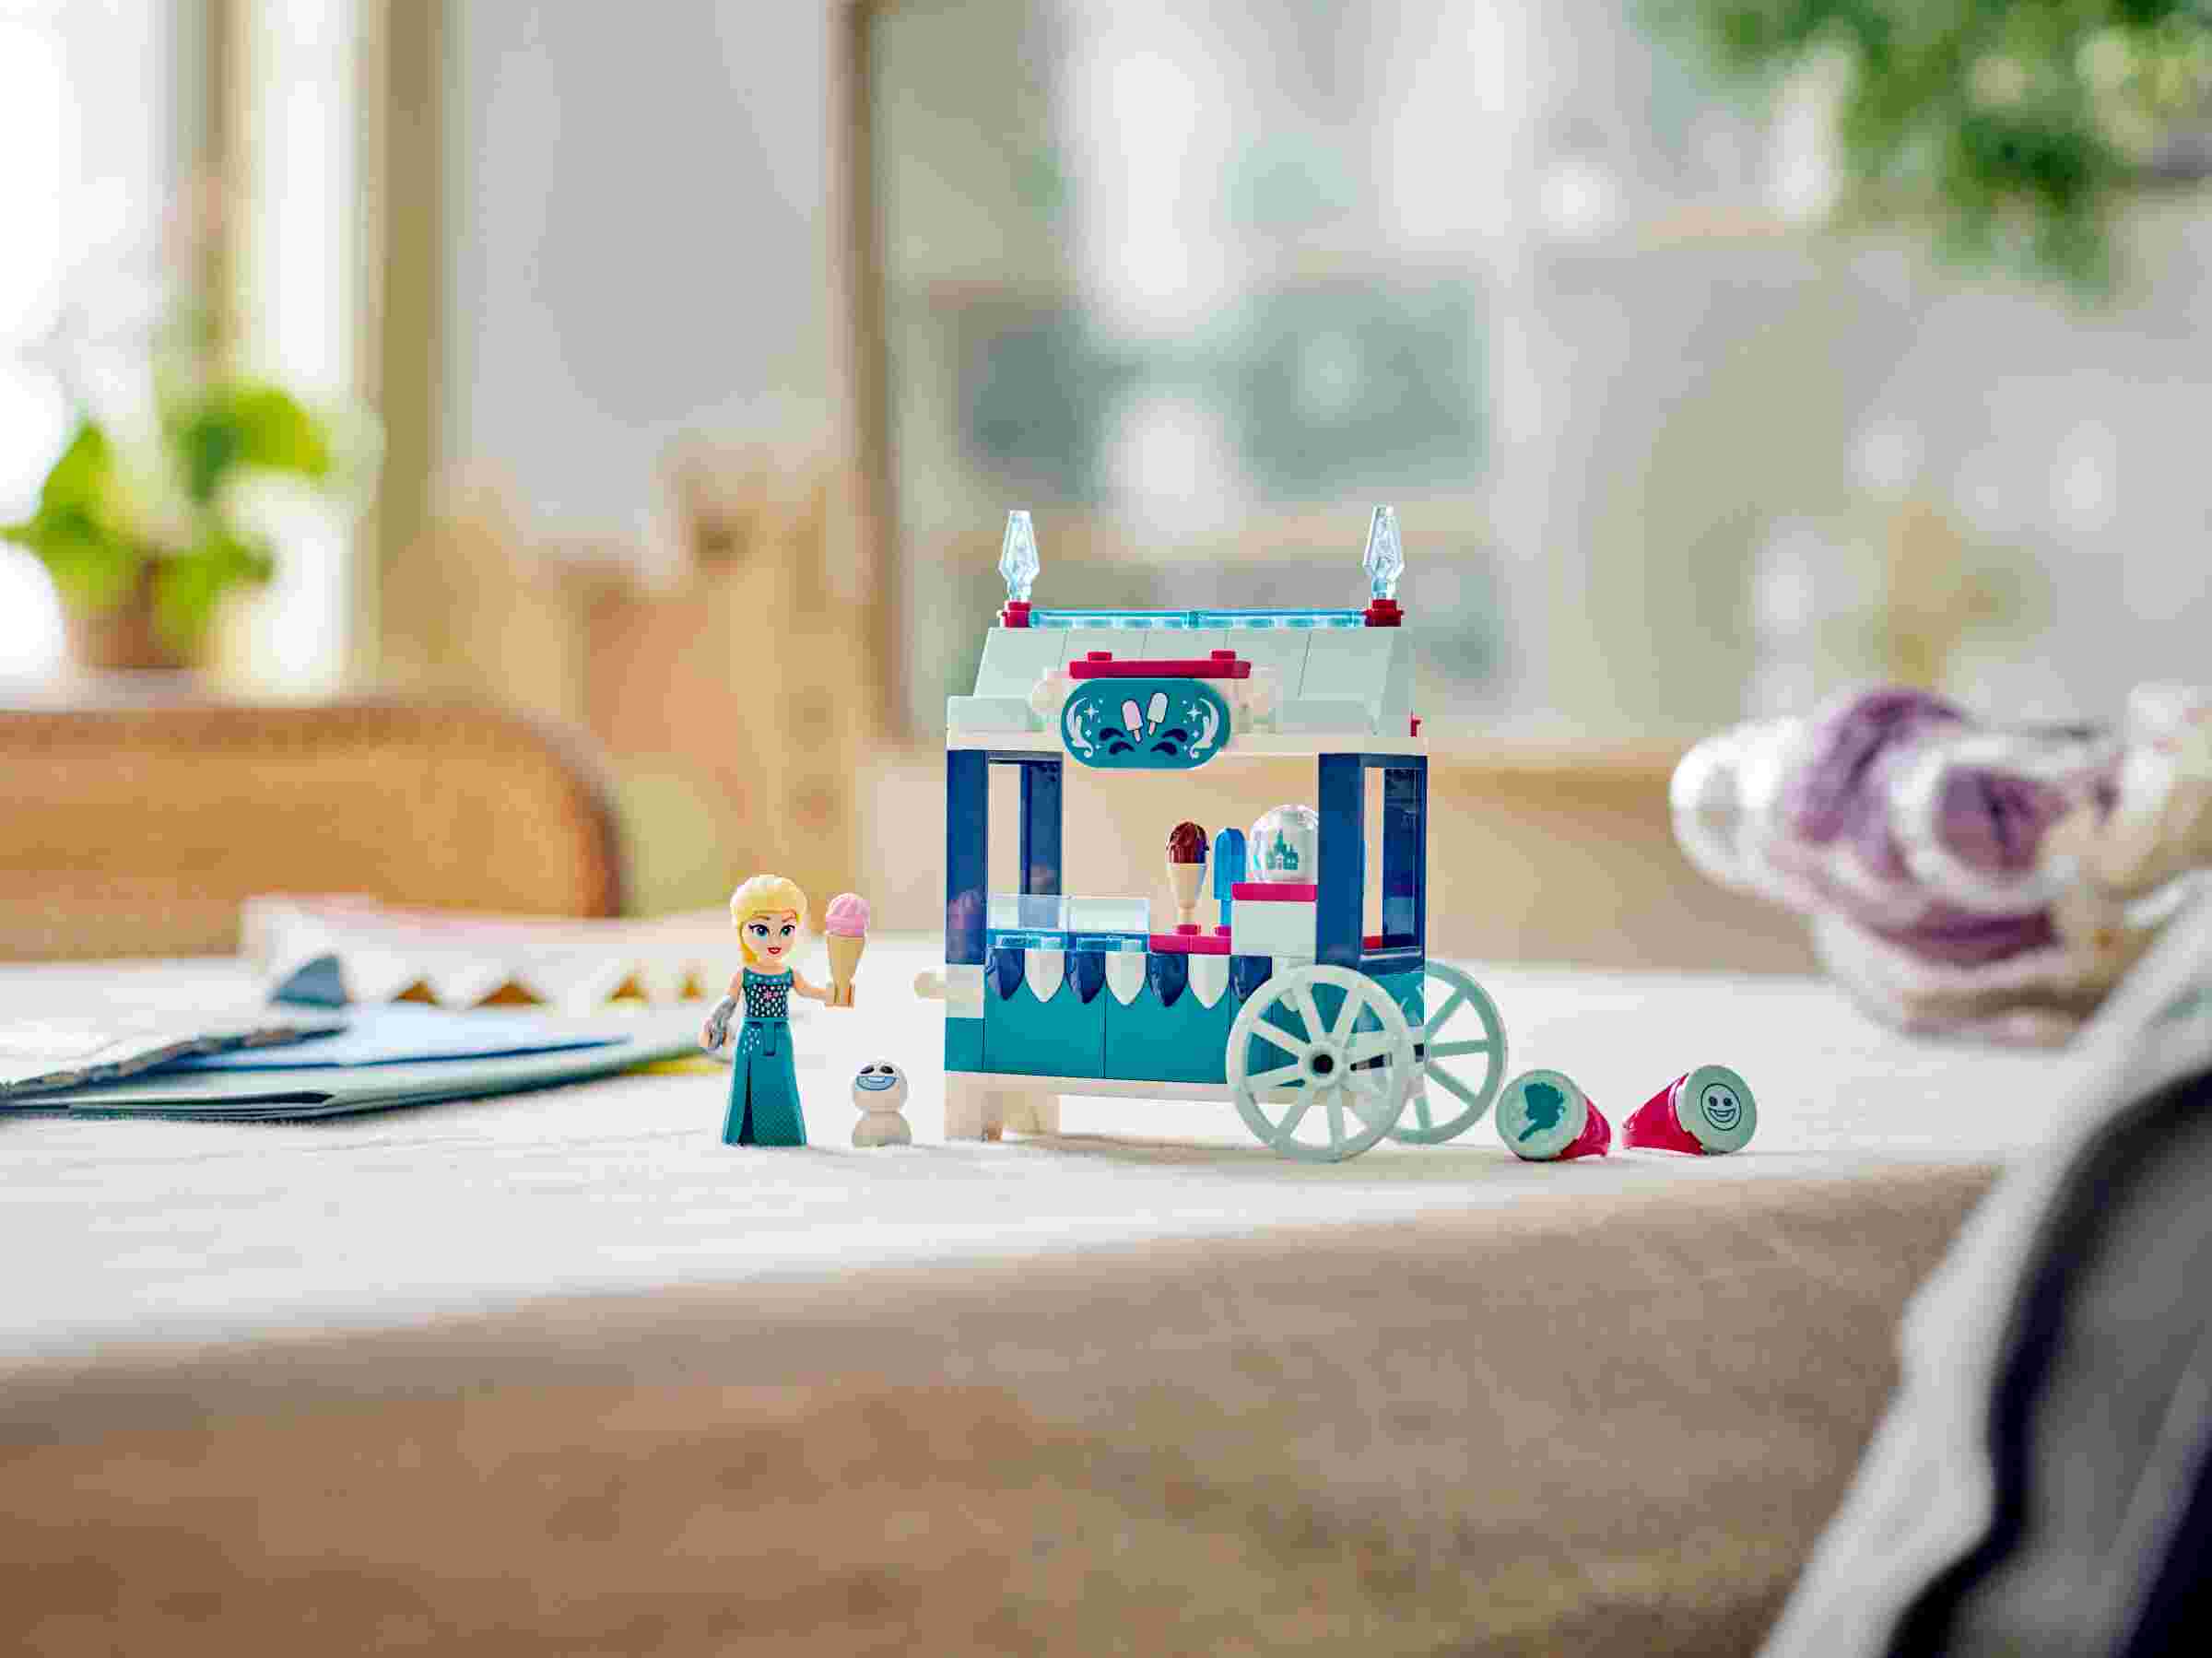 LEGO 43234 Disney Princess Elsas Eisstand, Eismaschine, Mini-Schneemann